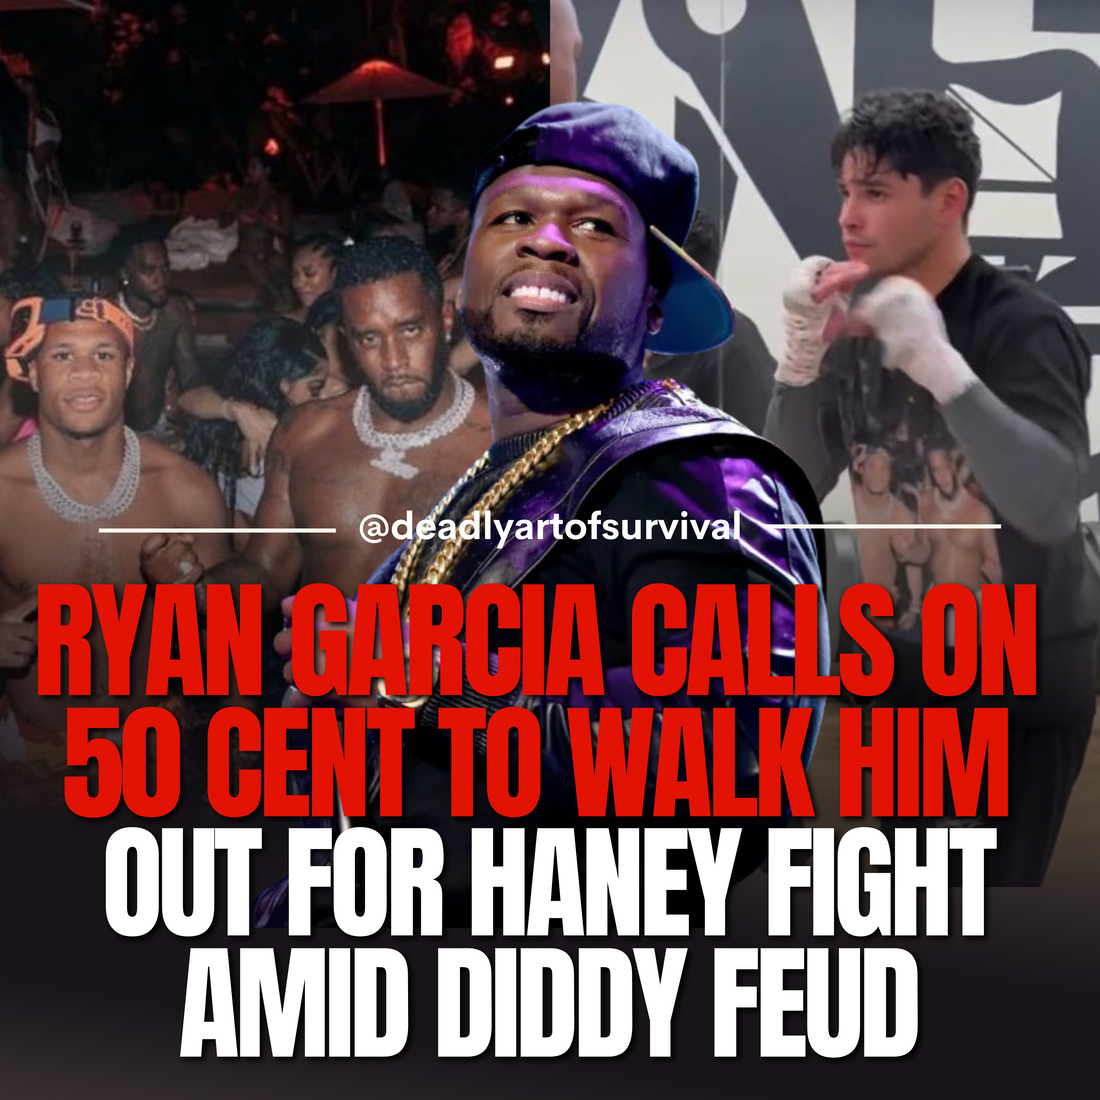 Ryan-Garcia-Calls-on-50-Cent-to-Walk-Him-Out-for-Haney-Fight-Amid-Diddy-Feud deadlyartofsurvival.com